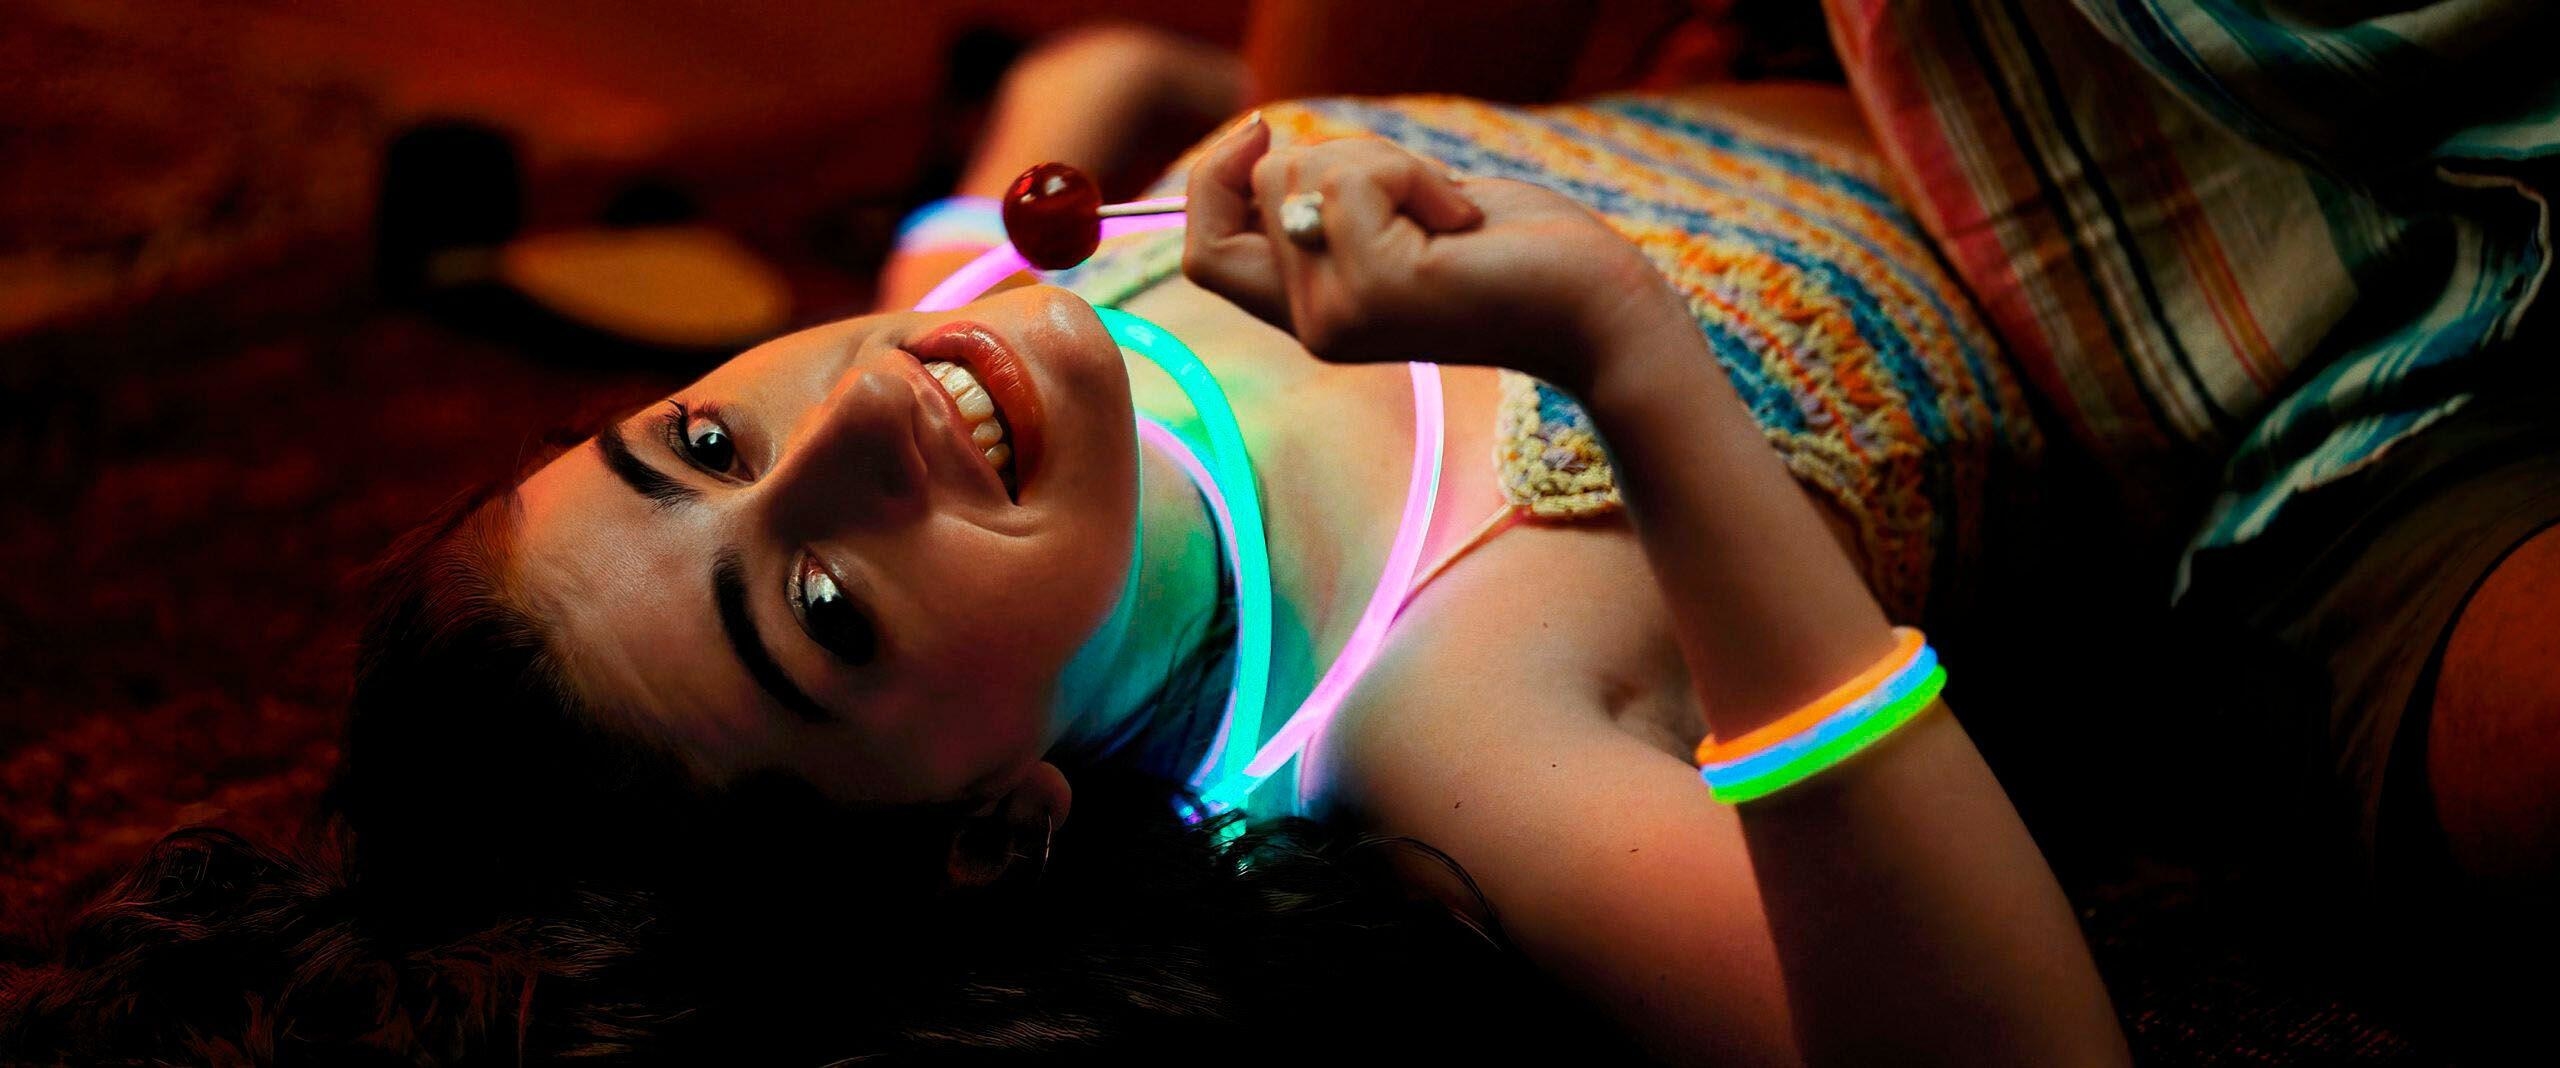 Rachel Sennott lays on a rug with glow sticks and a lollipop